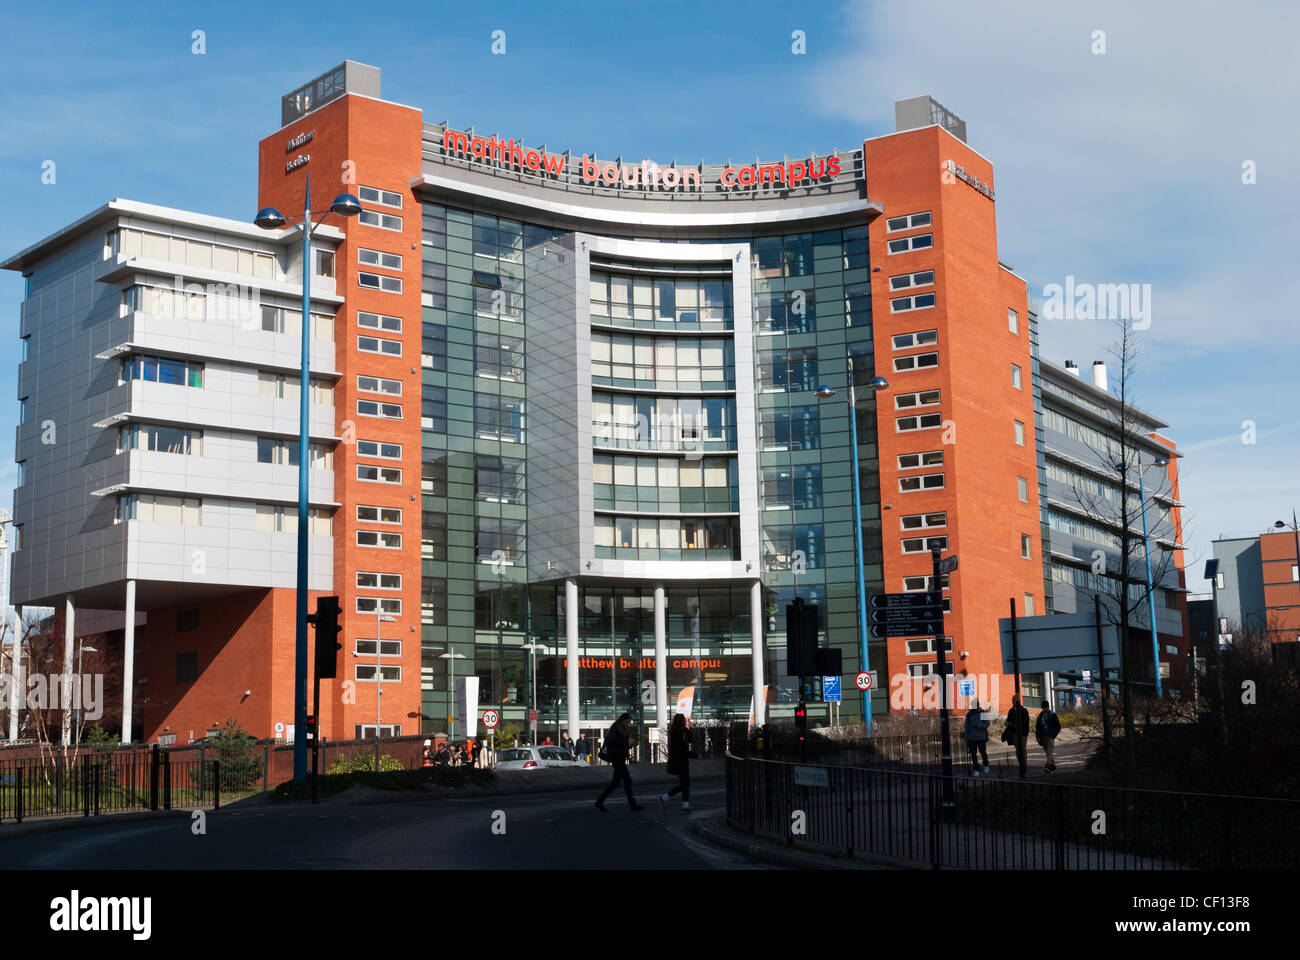 The new Matthew Boulton Campus building in Birmingham Stock Photo